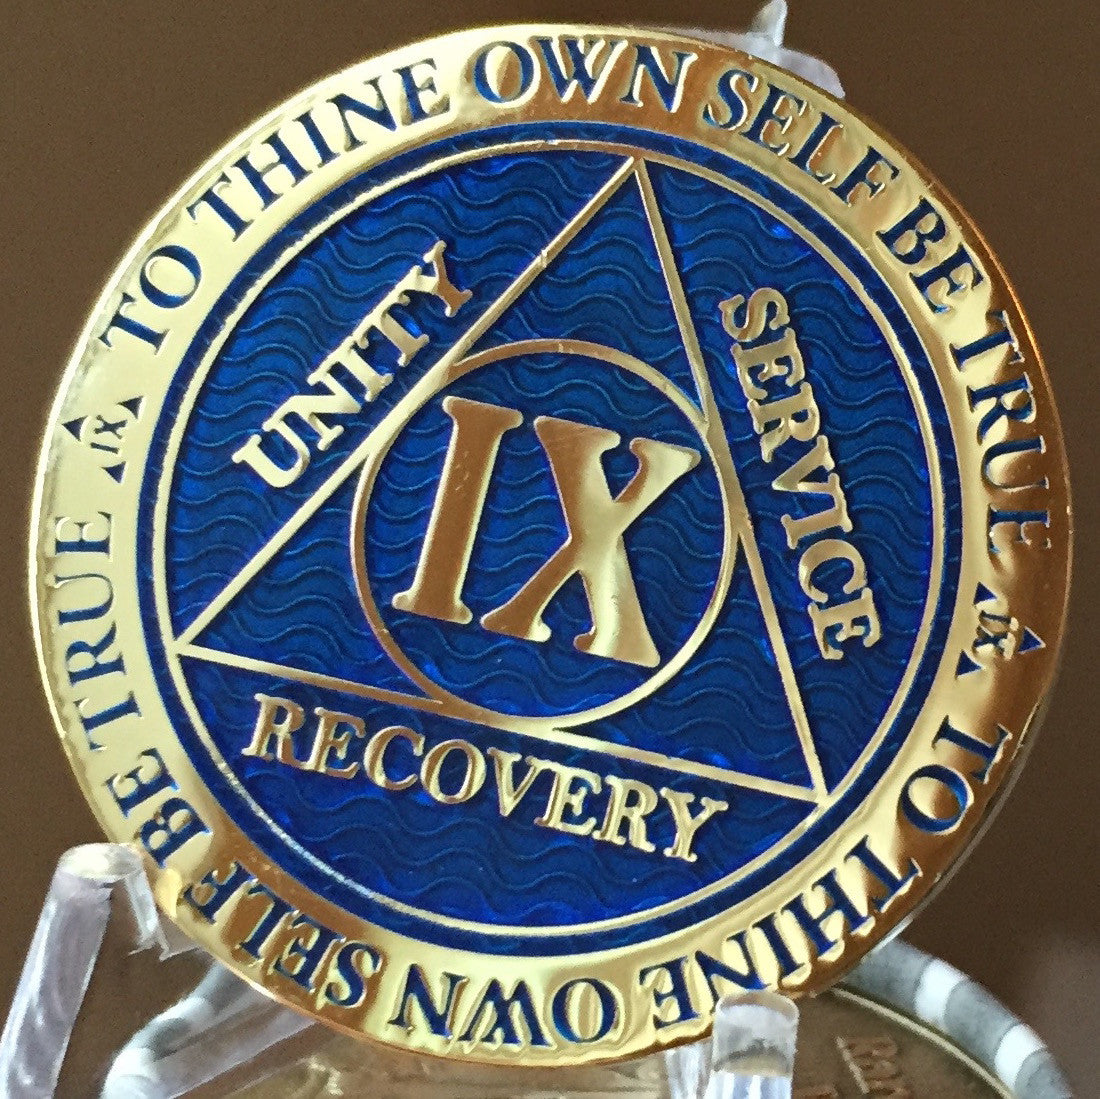 9 Coin Cedar AA Medallion Holder Chip Display Handmade #1 – RecoveryChip